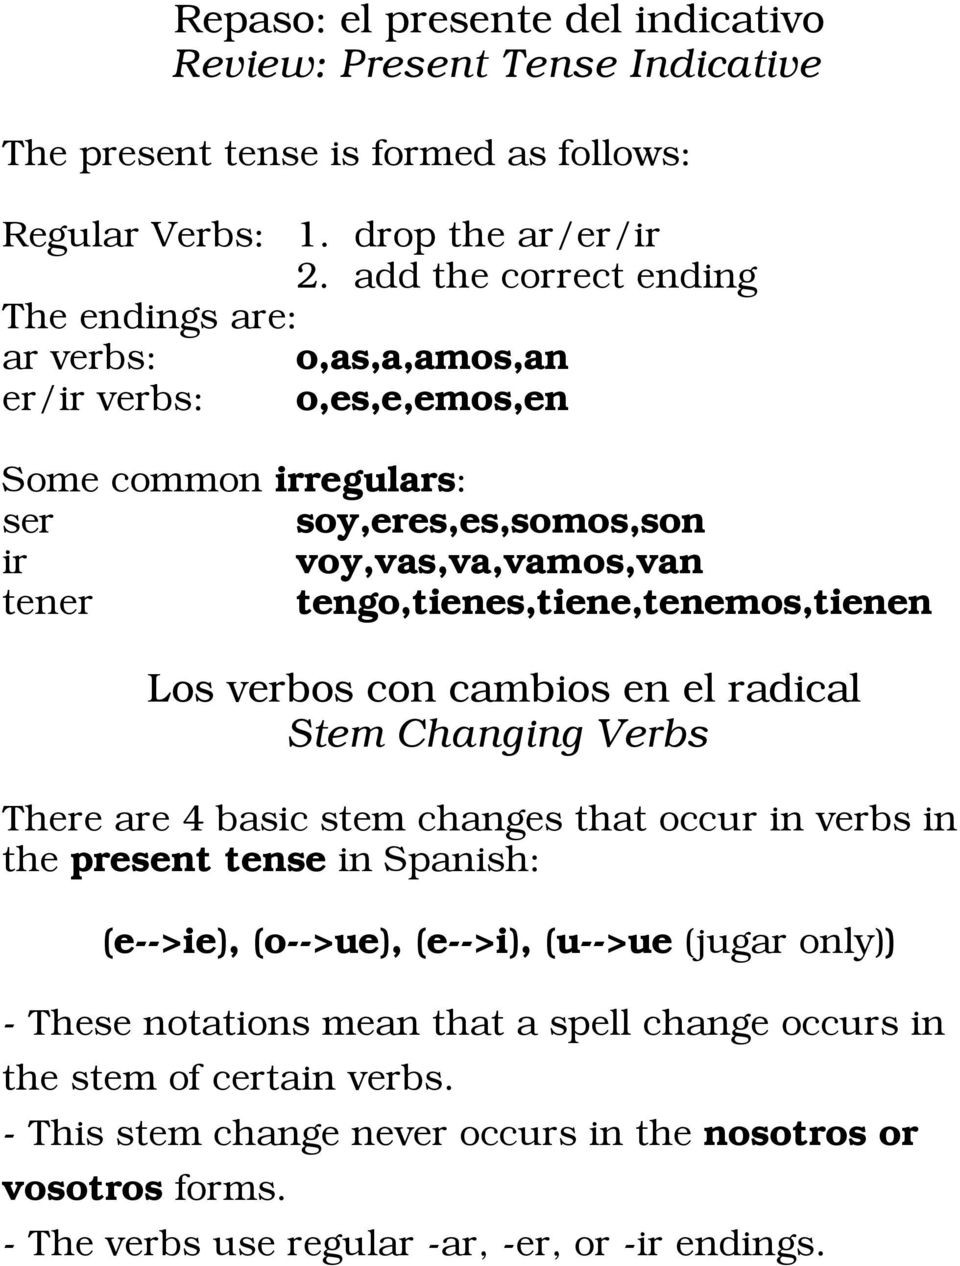 Stem Changing Verbs Worksheet Answers Repaso El Presente Del Indicativo Review Present Tense